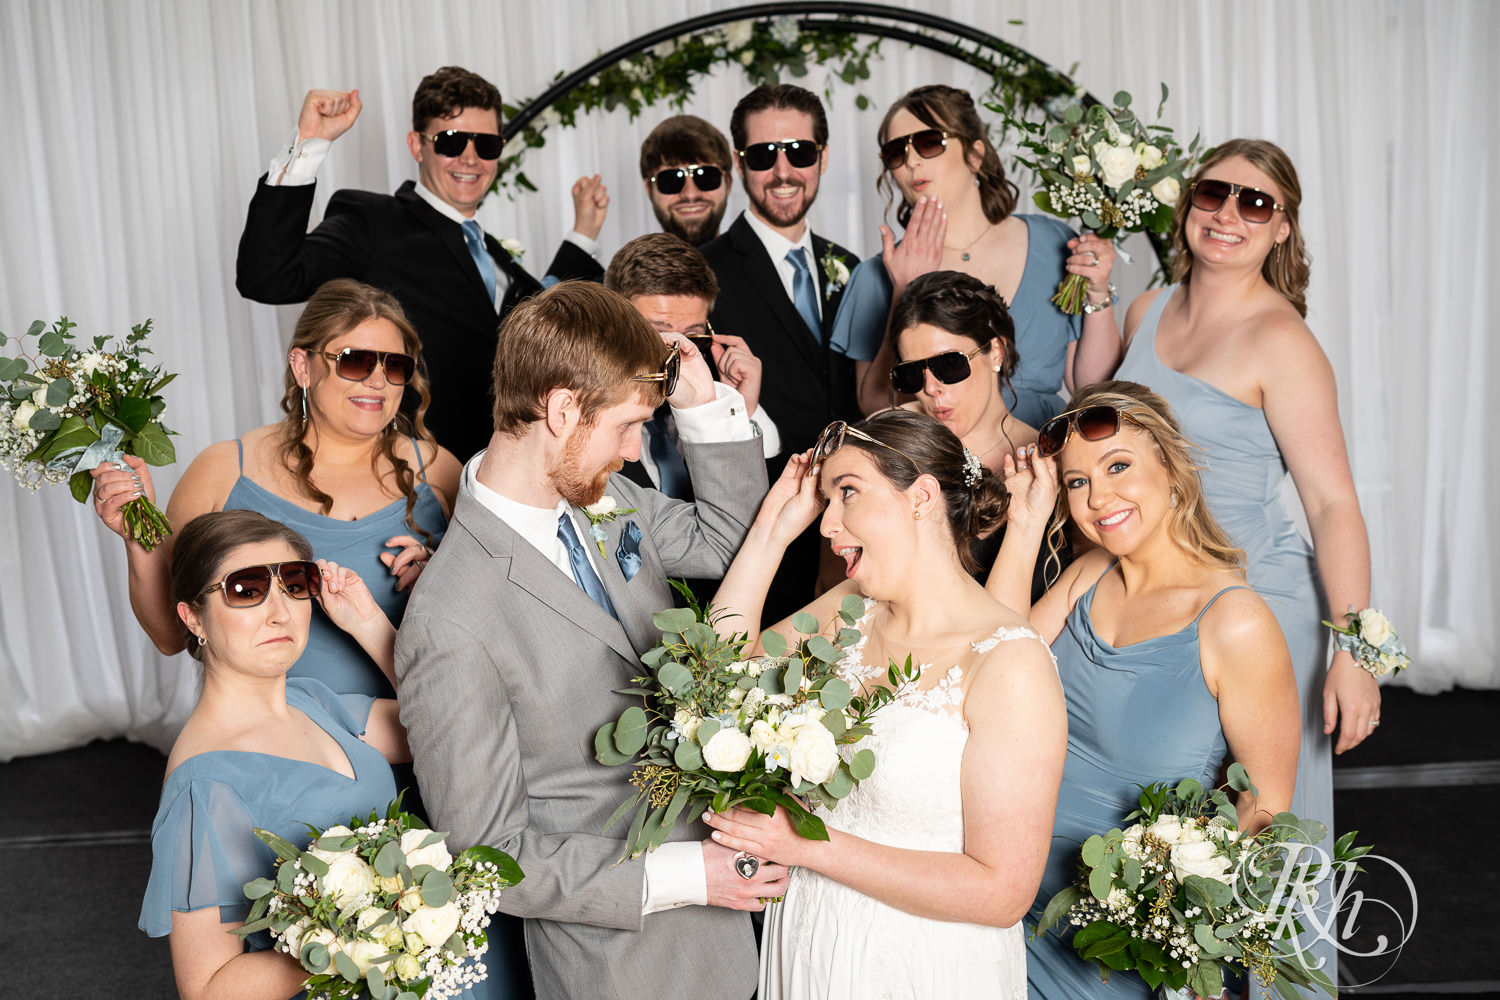 Wedding party wear sunglasses together at Doubletree Hilton Saint Paul in Saint Paul, Minnesota.